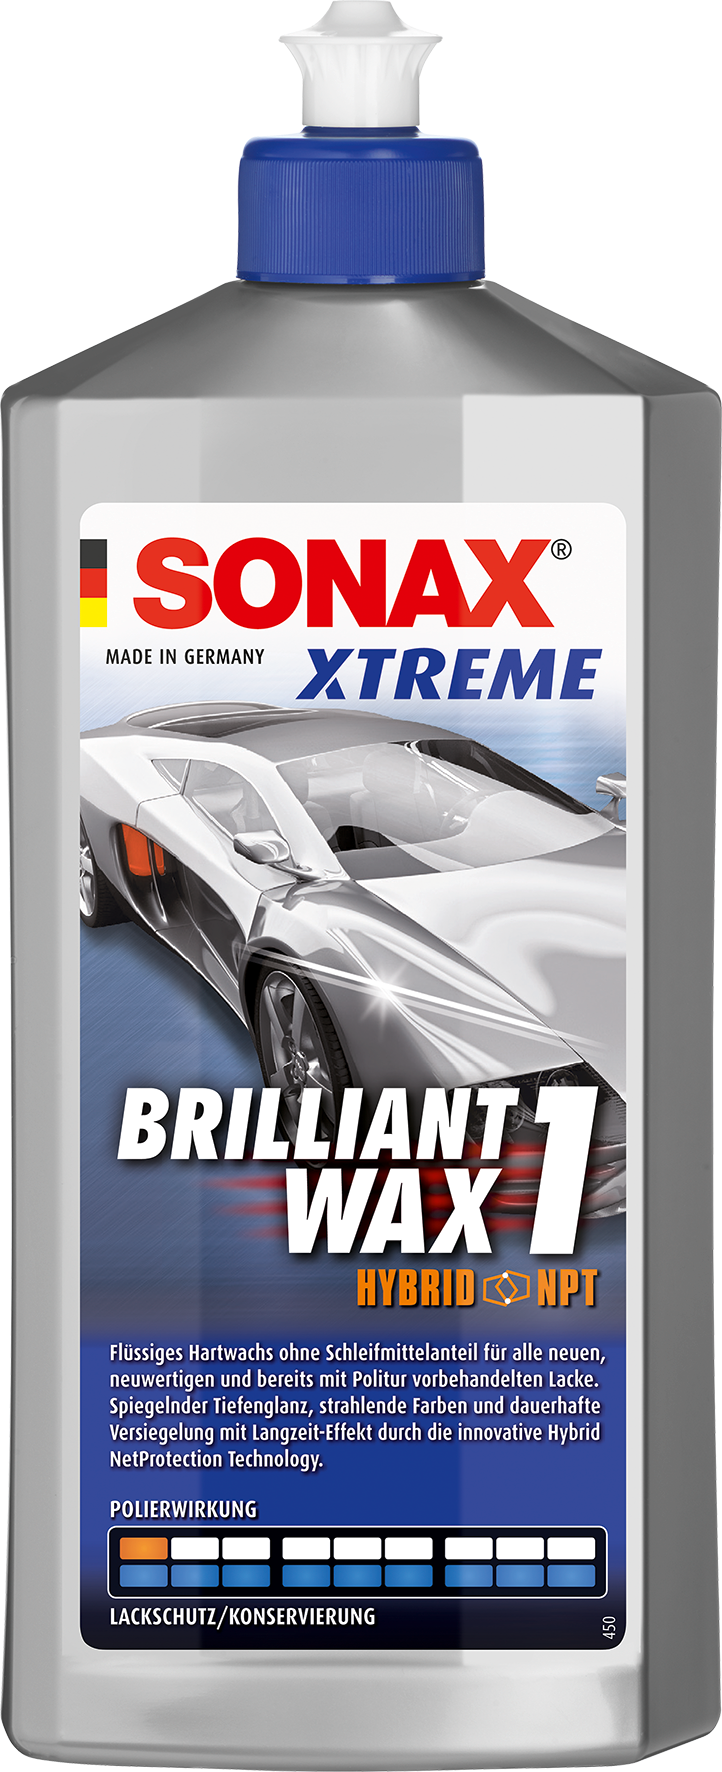 Sonax 02012000 Xtreme BrilliantWax1 Hybrid 500ml